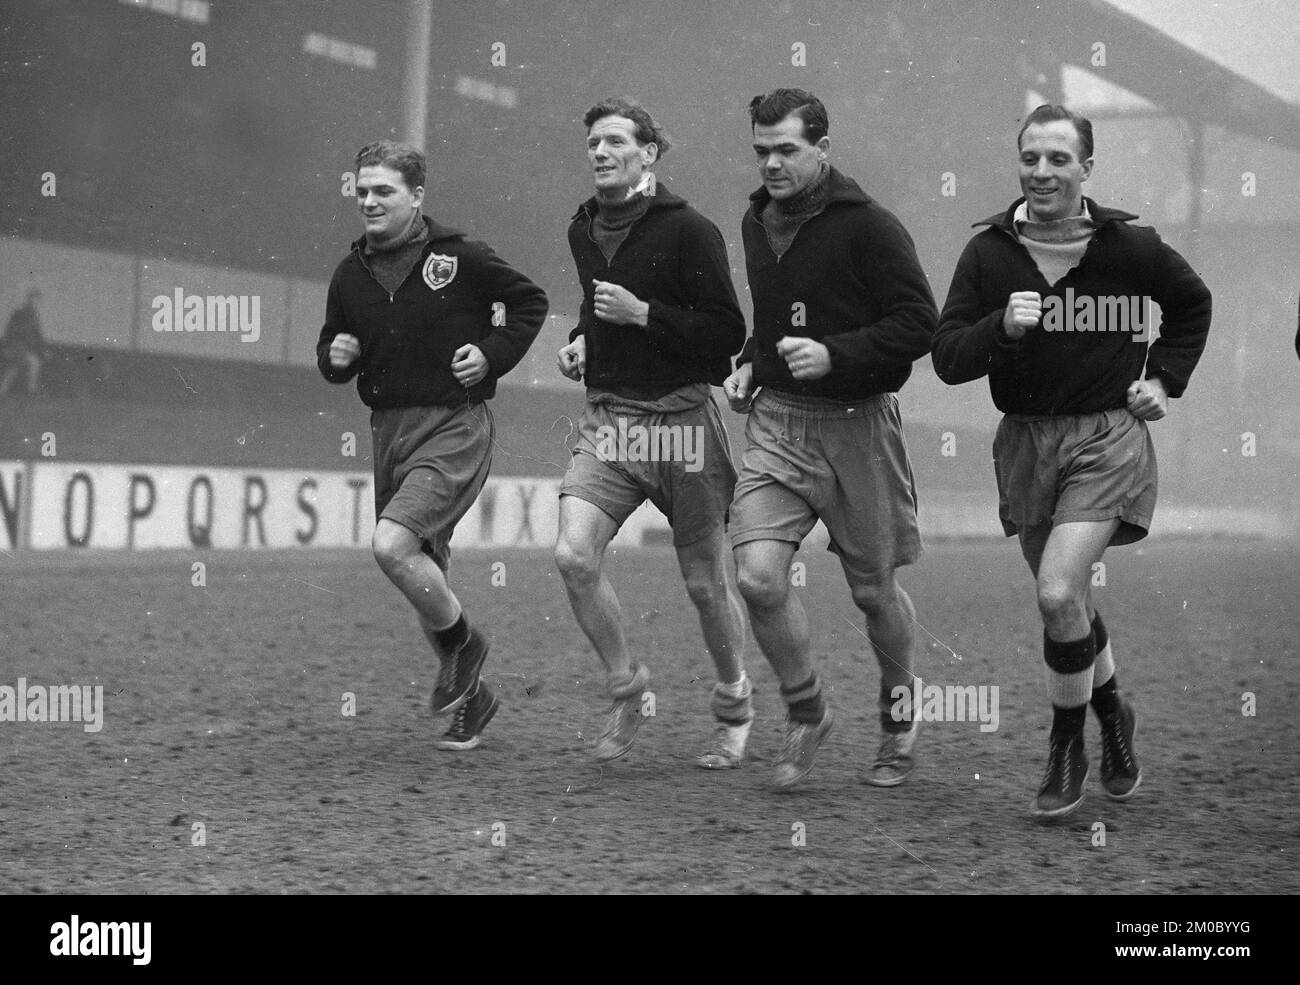 Tottenham Hotspur calciatori LtoR Billy Walters, Les Bennett, Len Duquemin, Eddie Baily, Les Medley allenamenti su White Hart Lane pitch 1951 Foto Stock